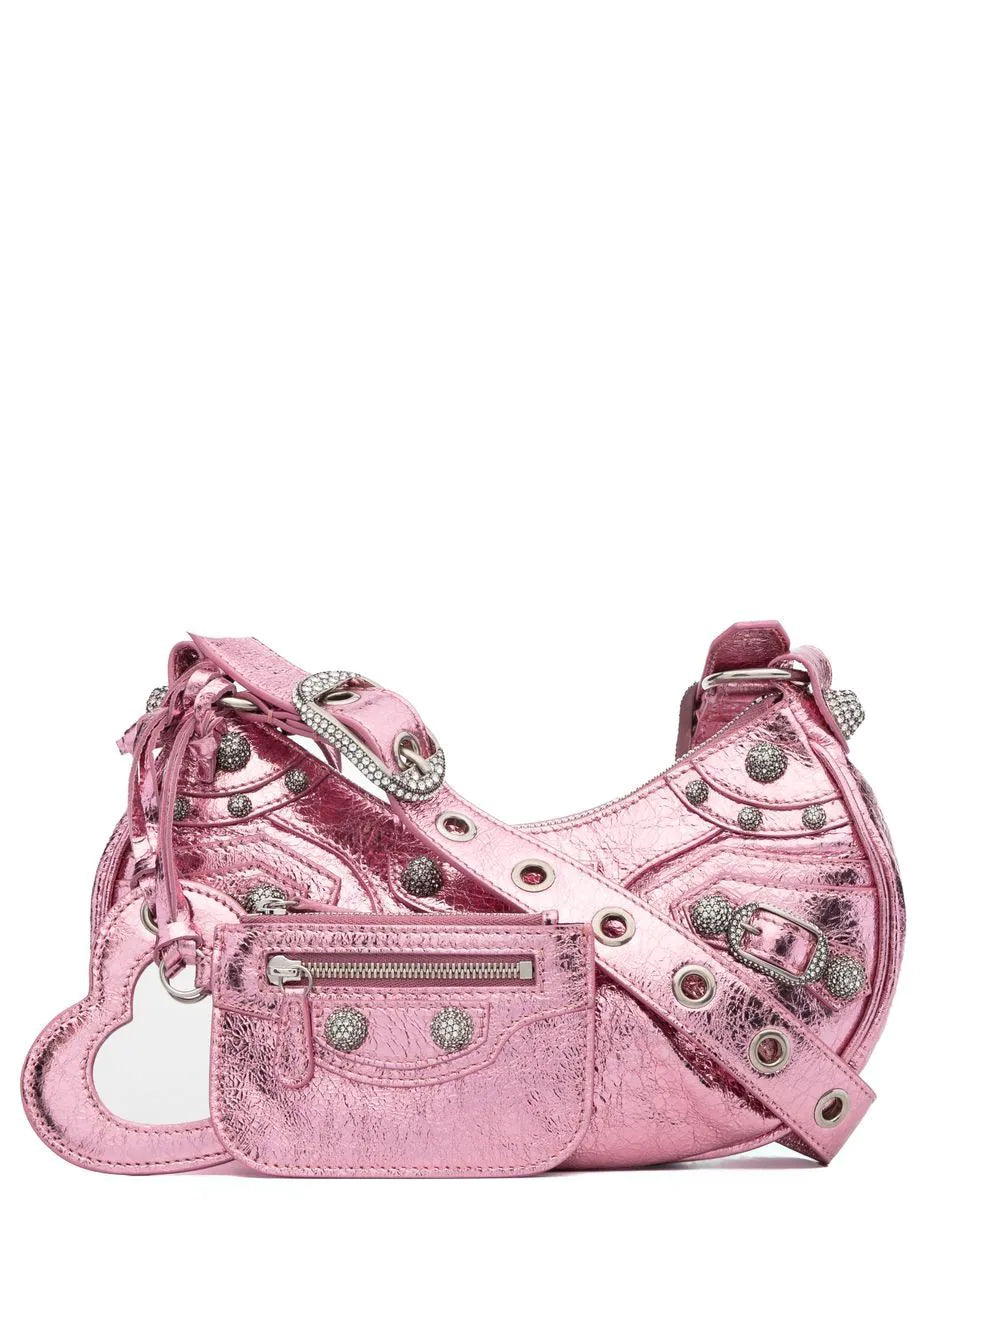 Luxury bag  Neo pink micro city bag